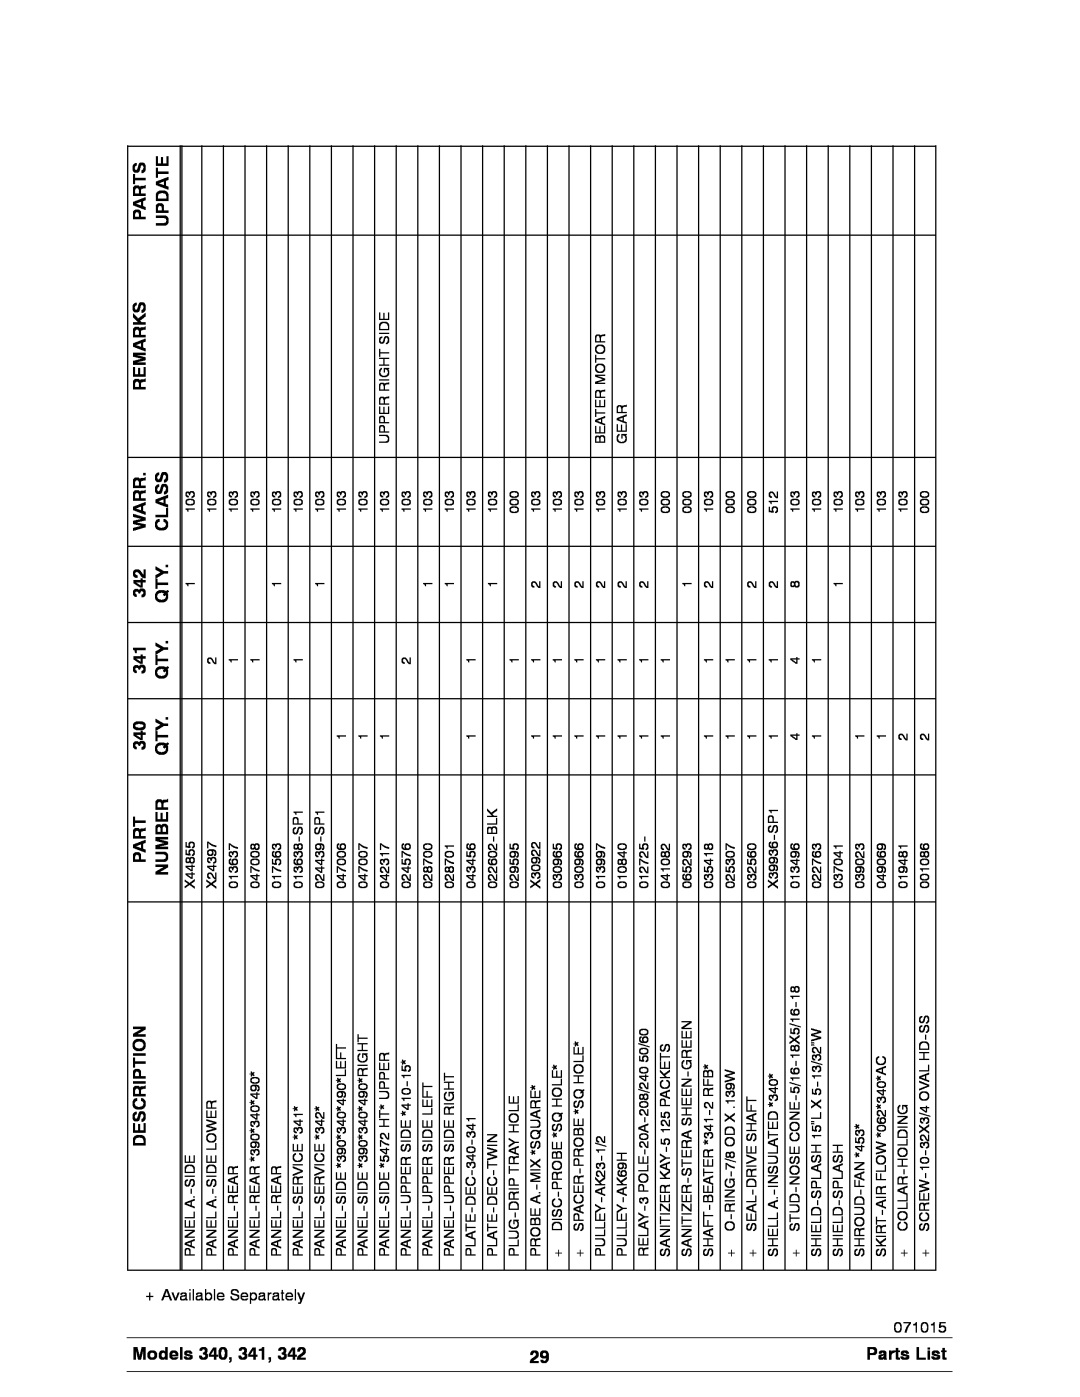 Taylor 342 manual Models 340, 341, Parts List, Description, Warr, Remarks, Number, Class, Update 